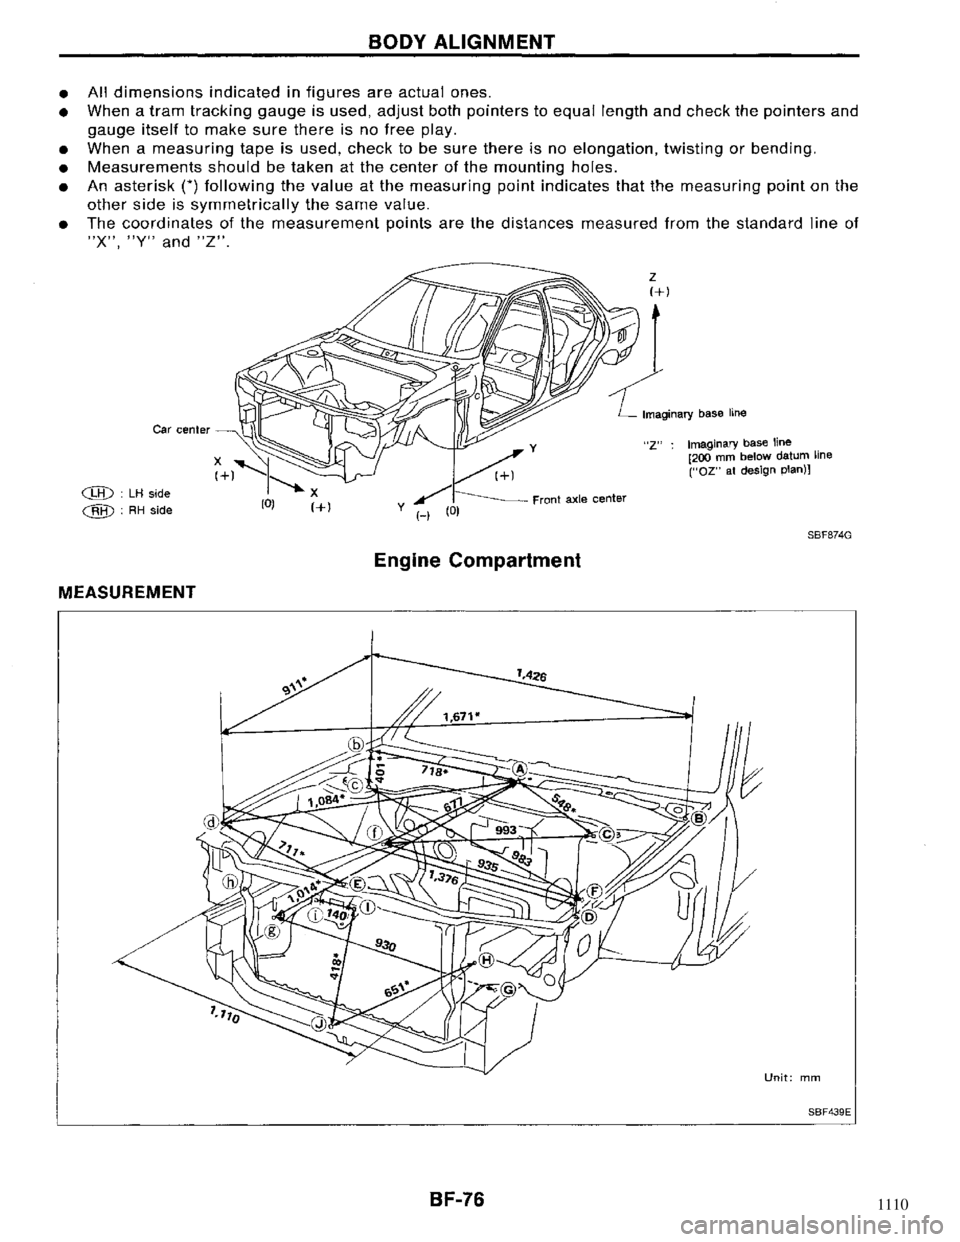 NISSAN MAXIMA 1994 A32 / 4.G Body Manual PDF 1110 